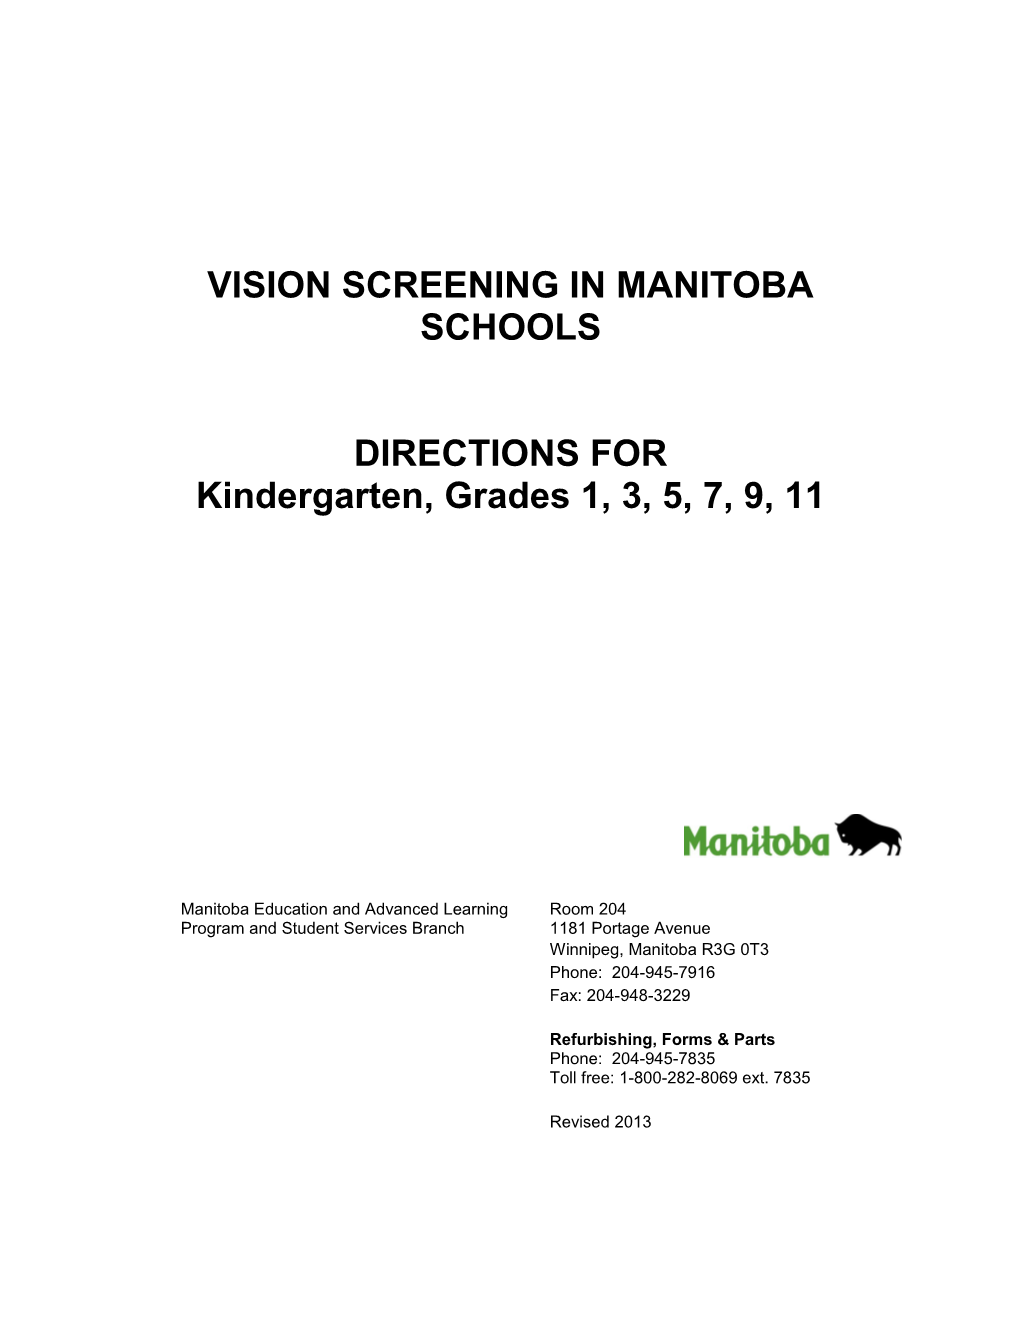 Vision Screening in Manitoba Schools